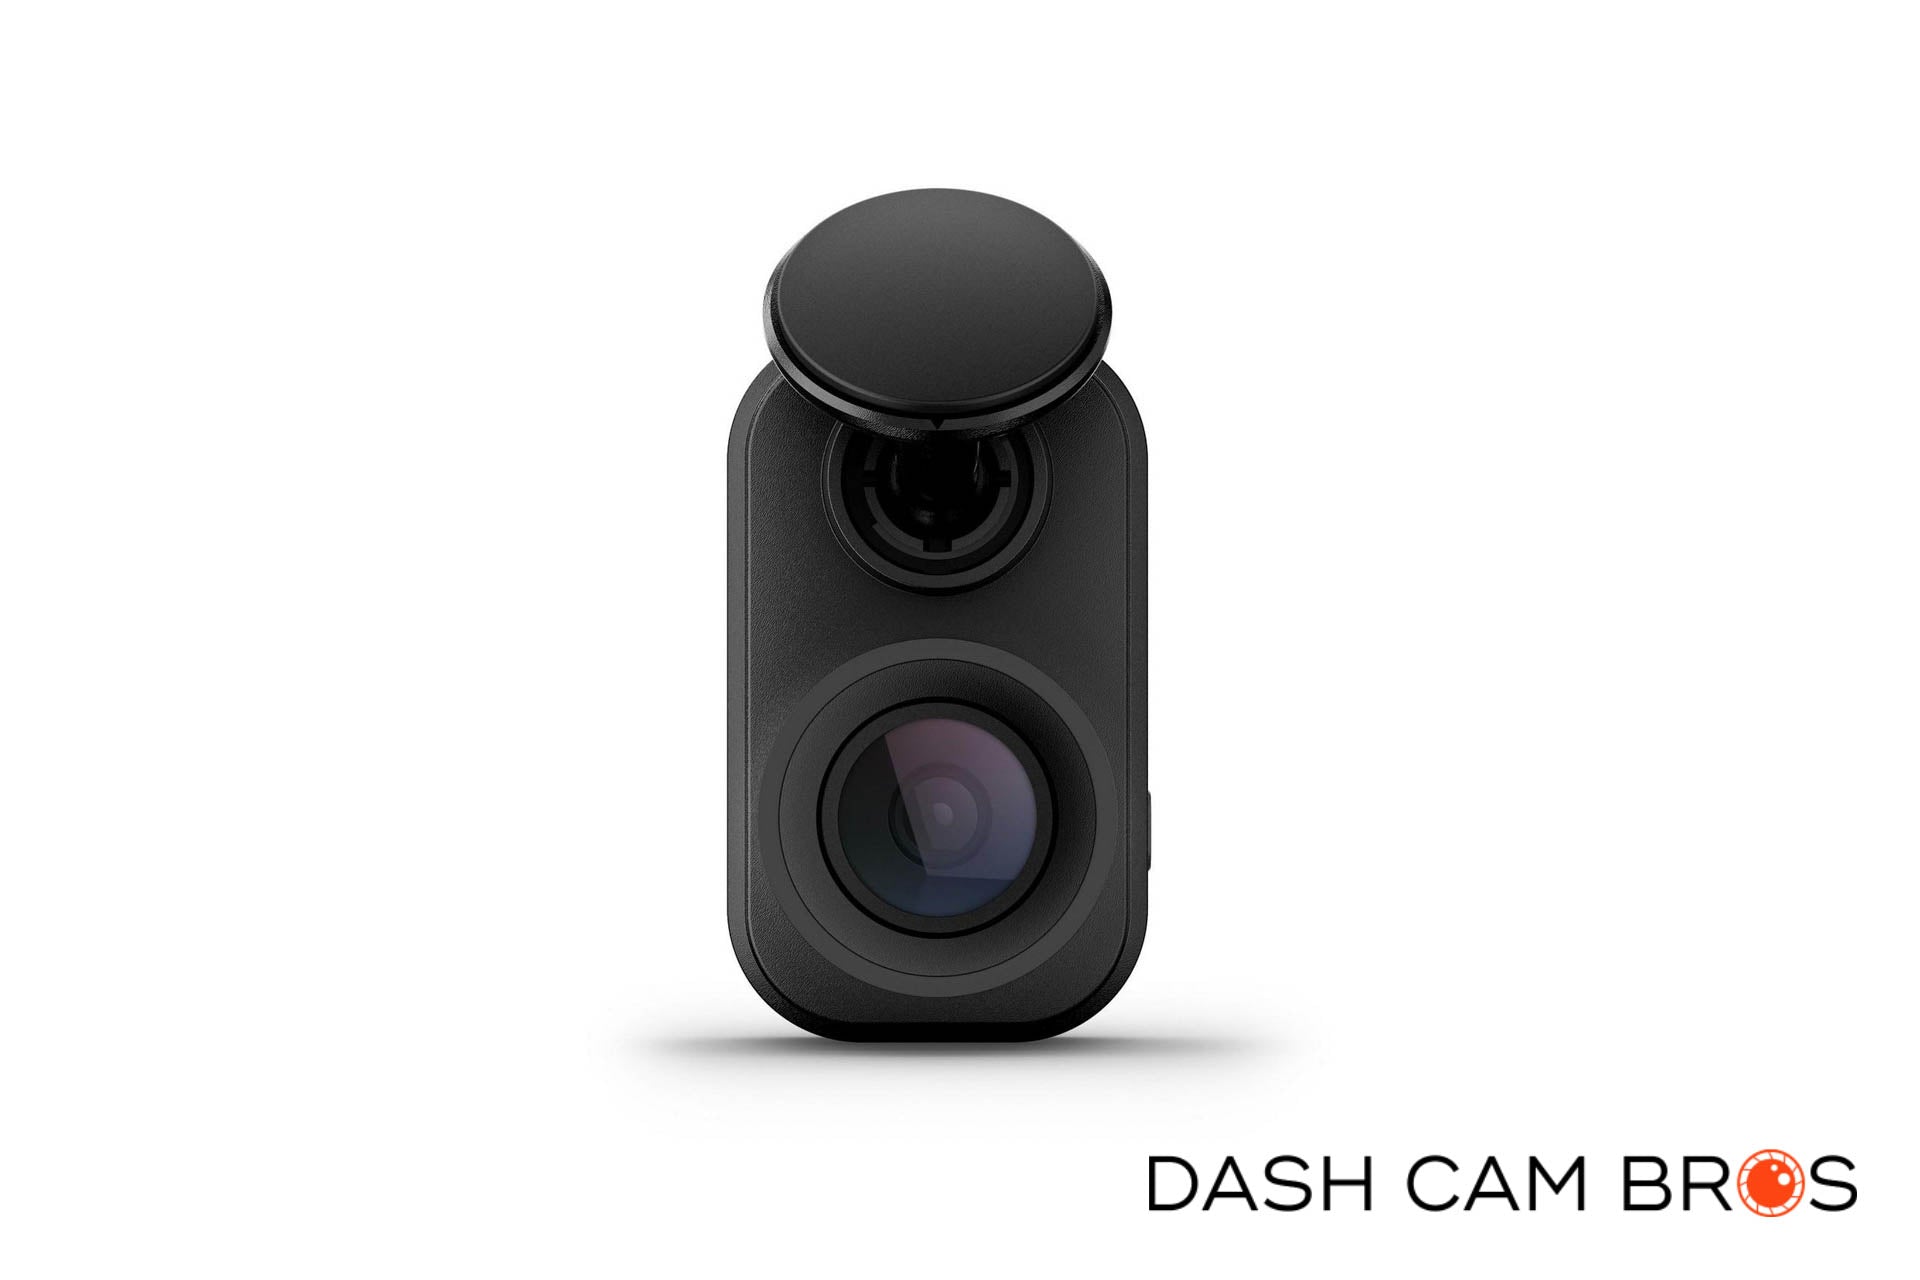 Garmin Dash Cam Mini 2 HD dash cam with Wi-Fi® and Bluetooth® at Crutchfield